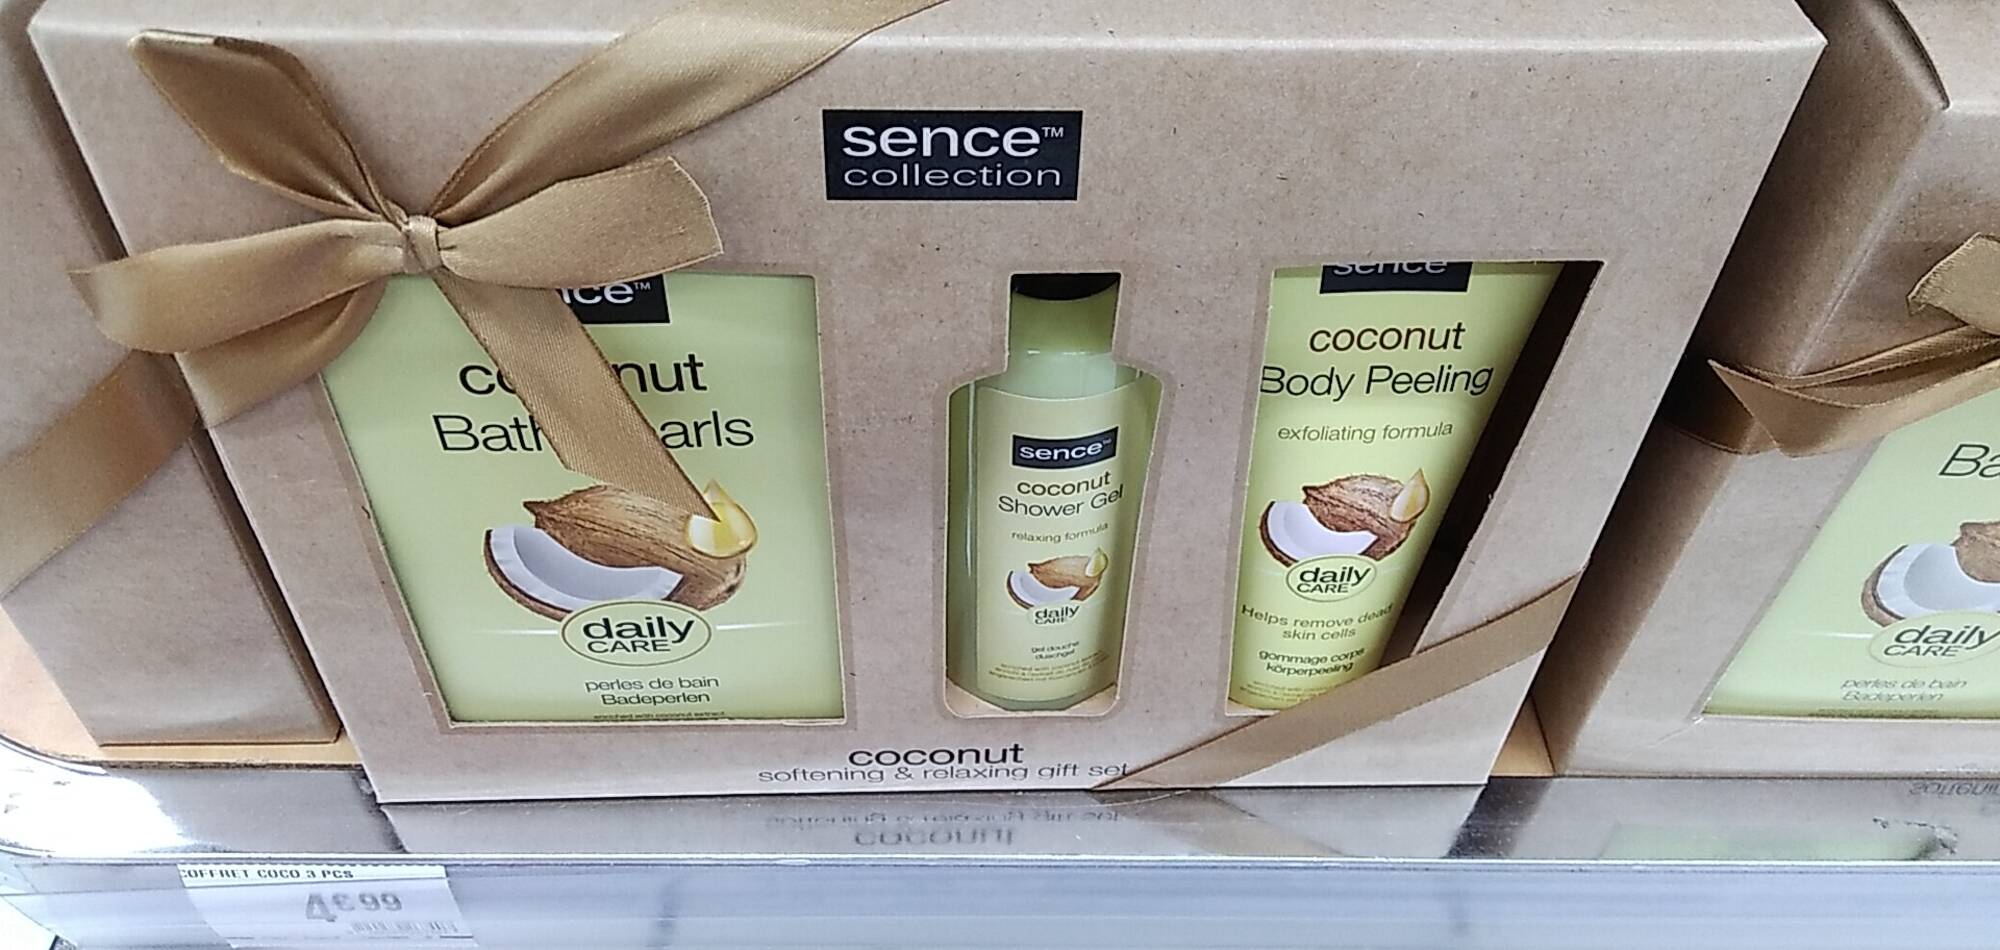 SENCE - Coconut - Softening & relaxing gift box